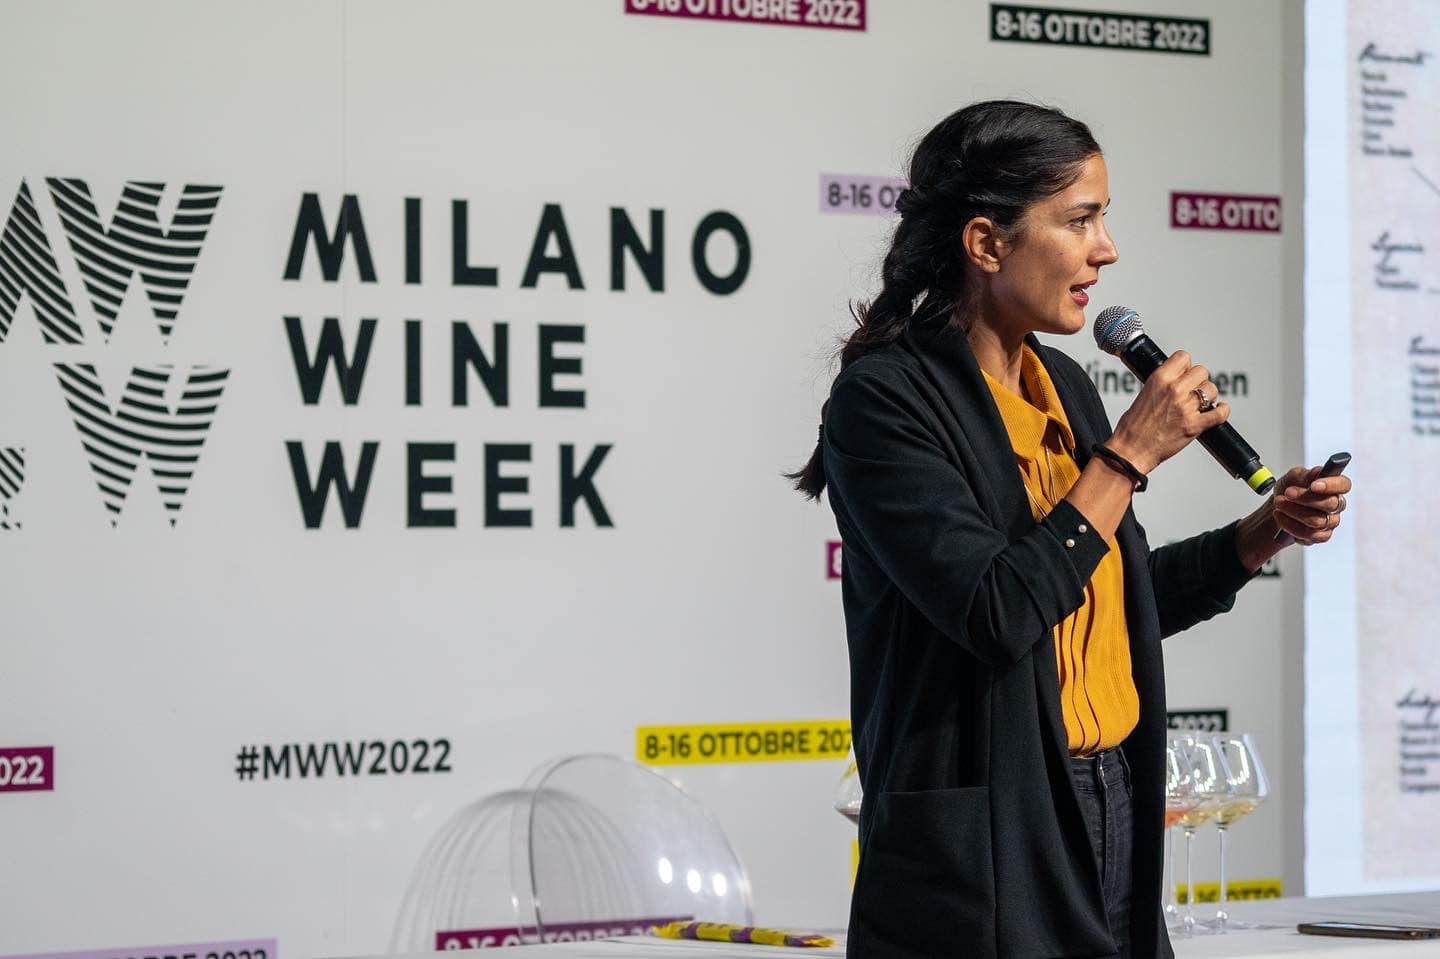 Milano Wine Week 2022 YOUparti